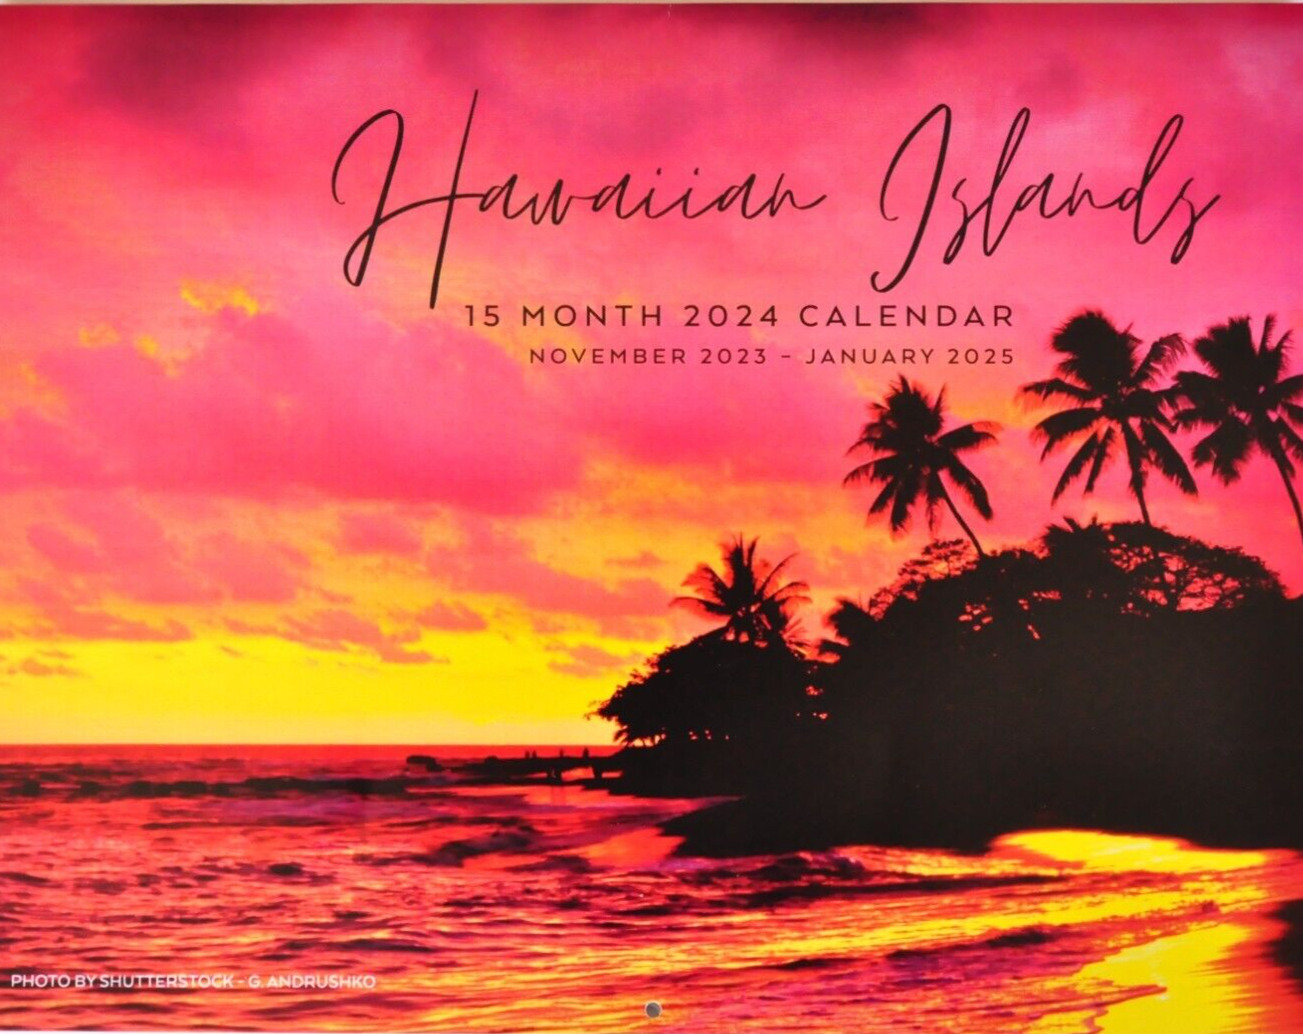 TWO FOR ONE SPECIAL HAWAII Maui Oahu Hawaiian Islands 2024 WALL CALENDAR Beach+